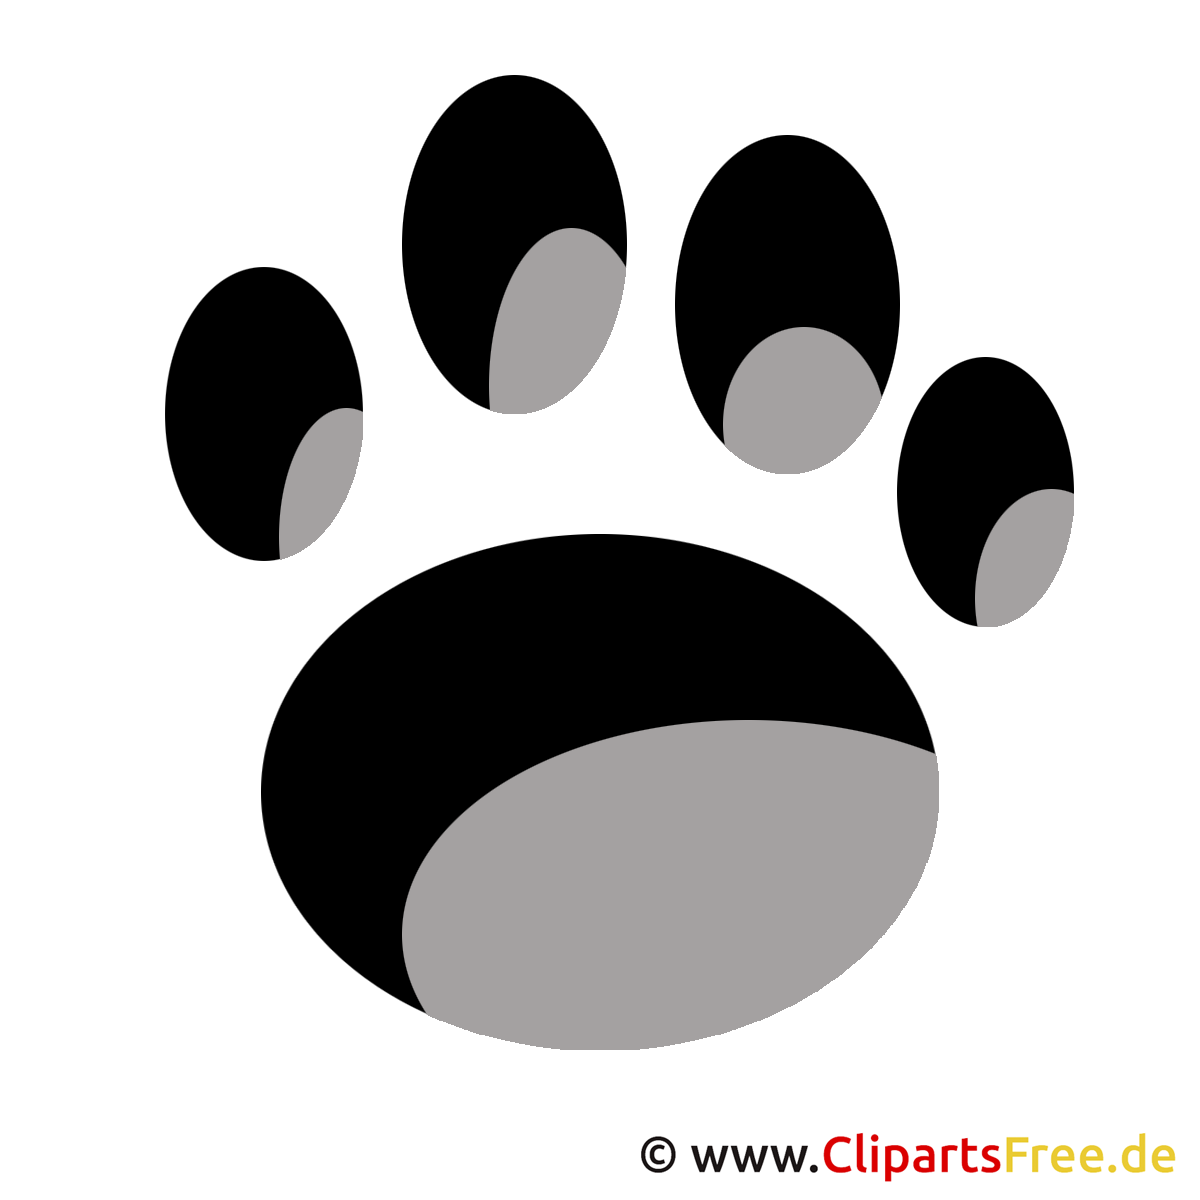 cliparts hundepfoten - photo #10